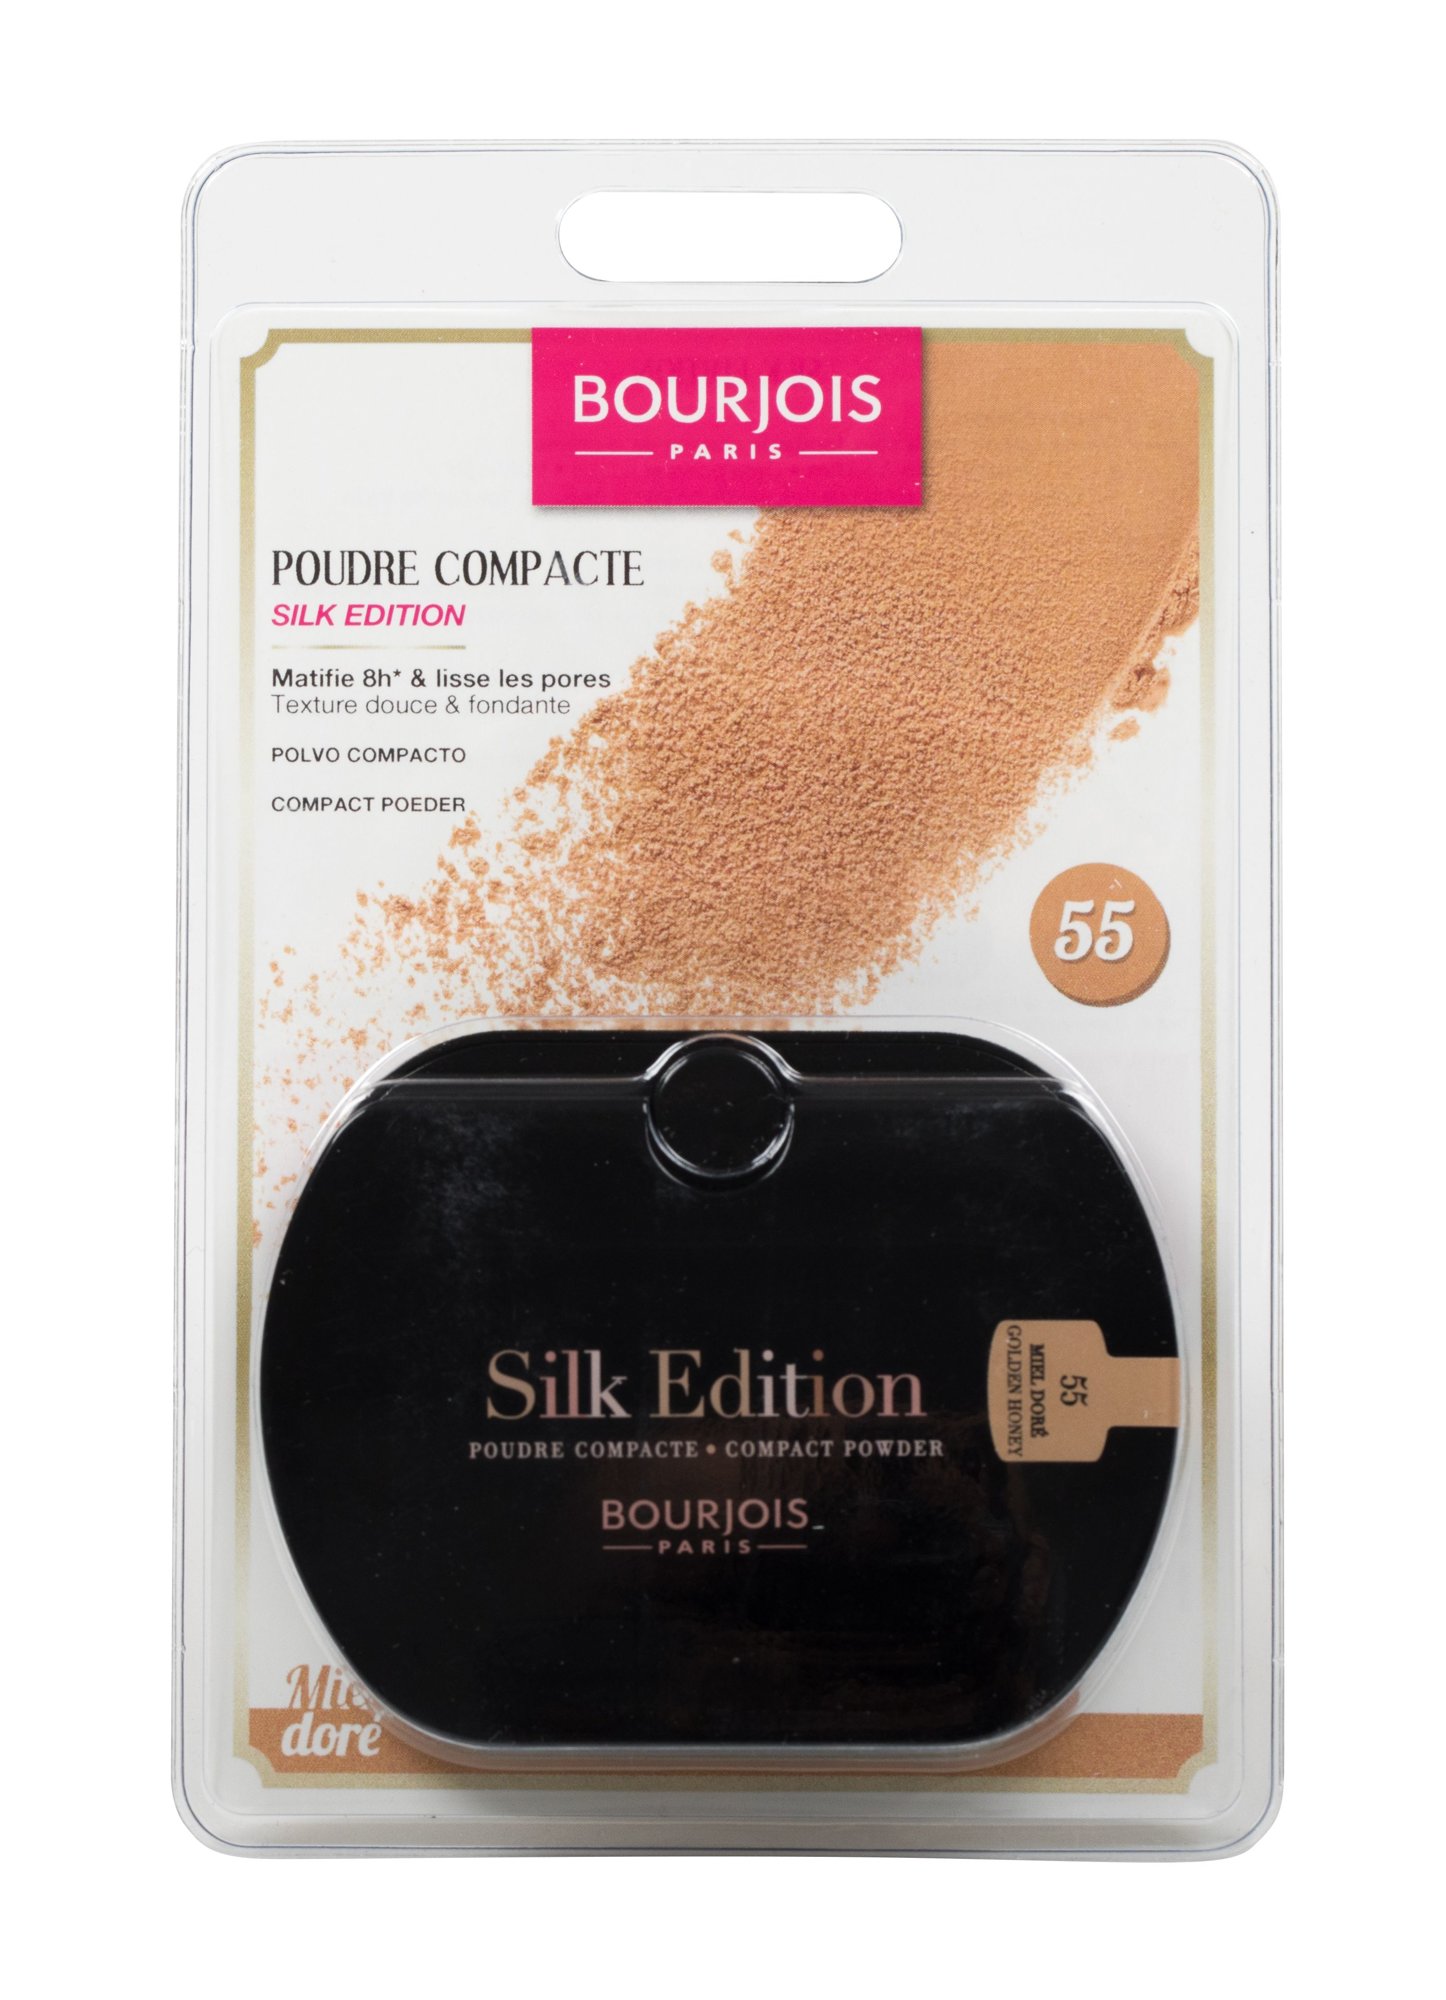 BOURJOIS Paris Silk Edition Compact Powder 9g sausa pudra